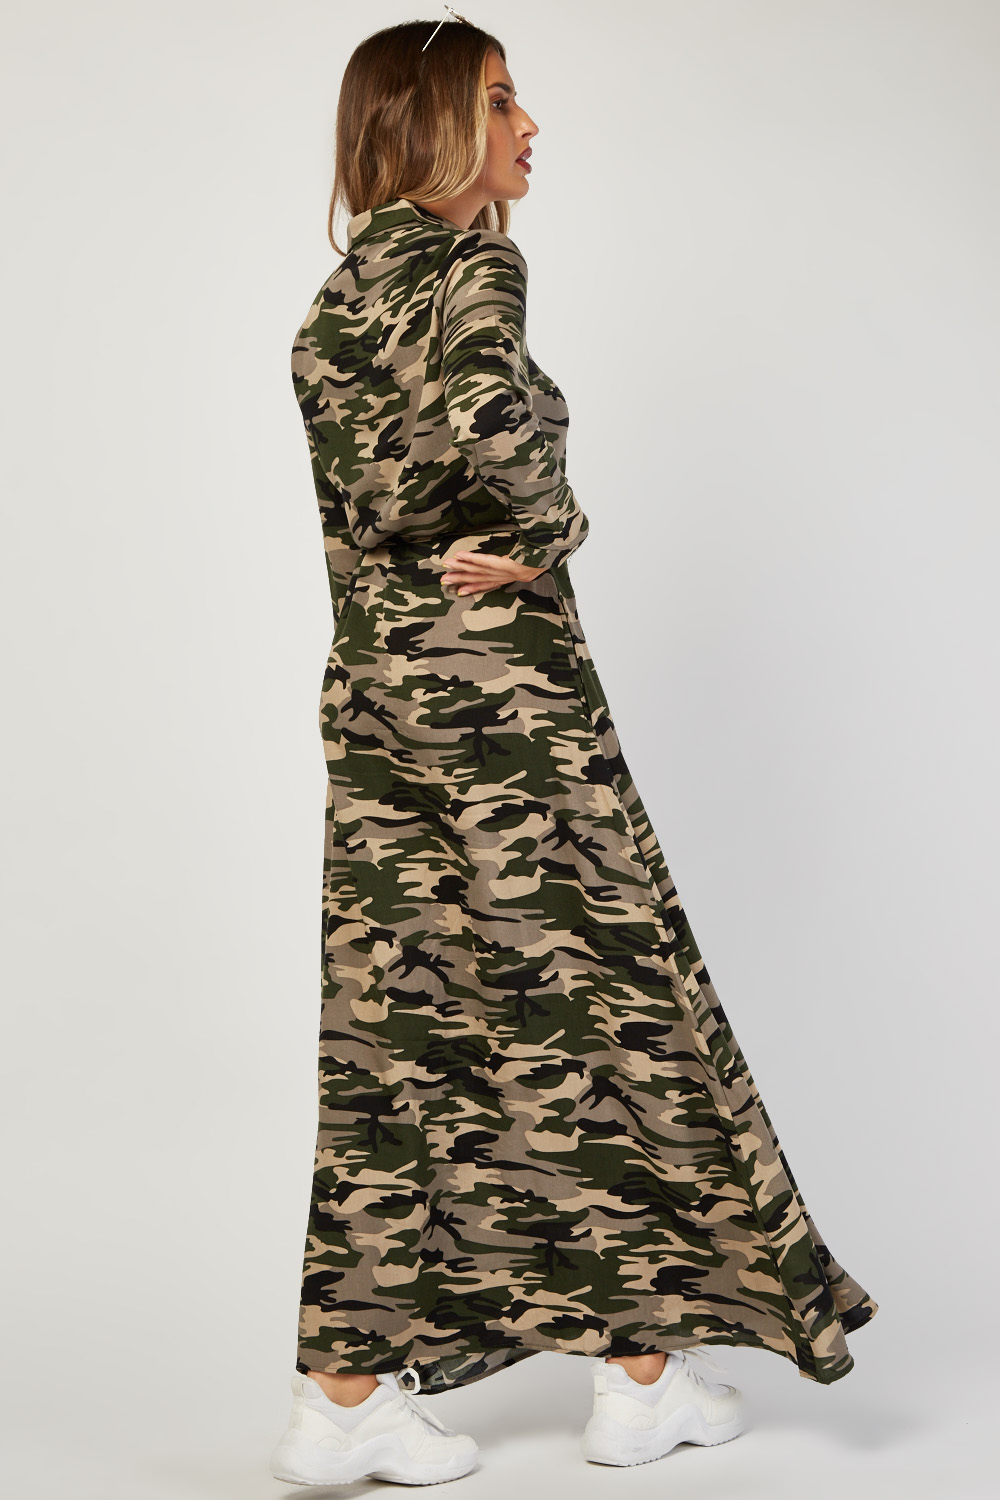 Long Sleeve Maxi Camo Dress - Just $7